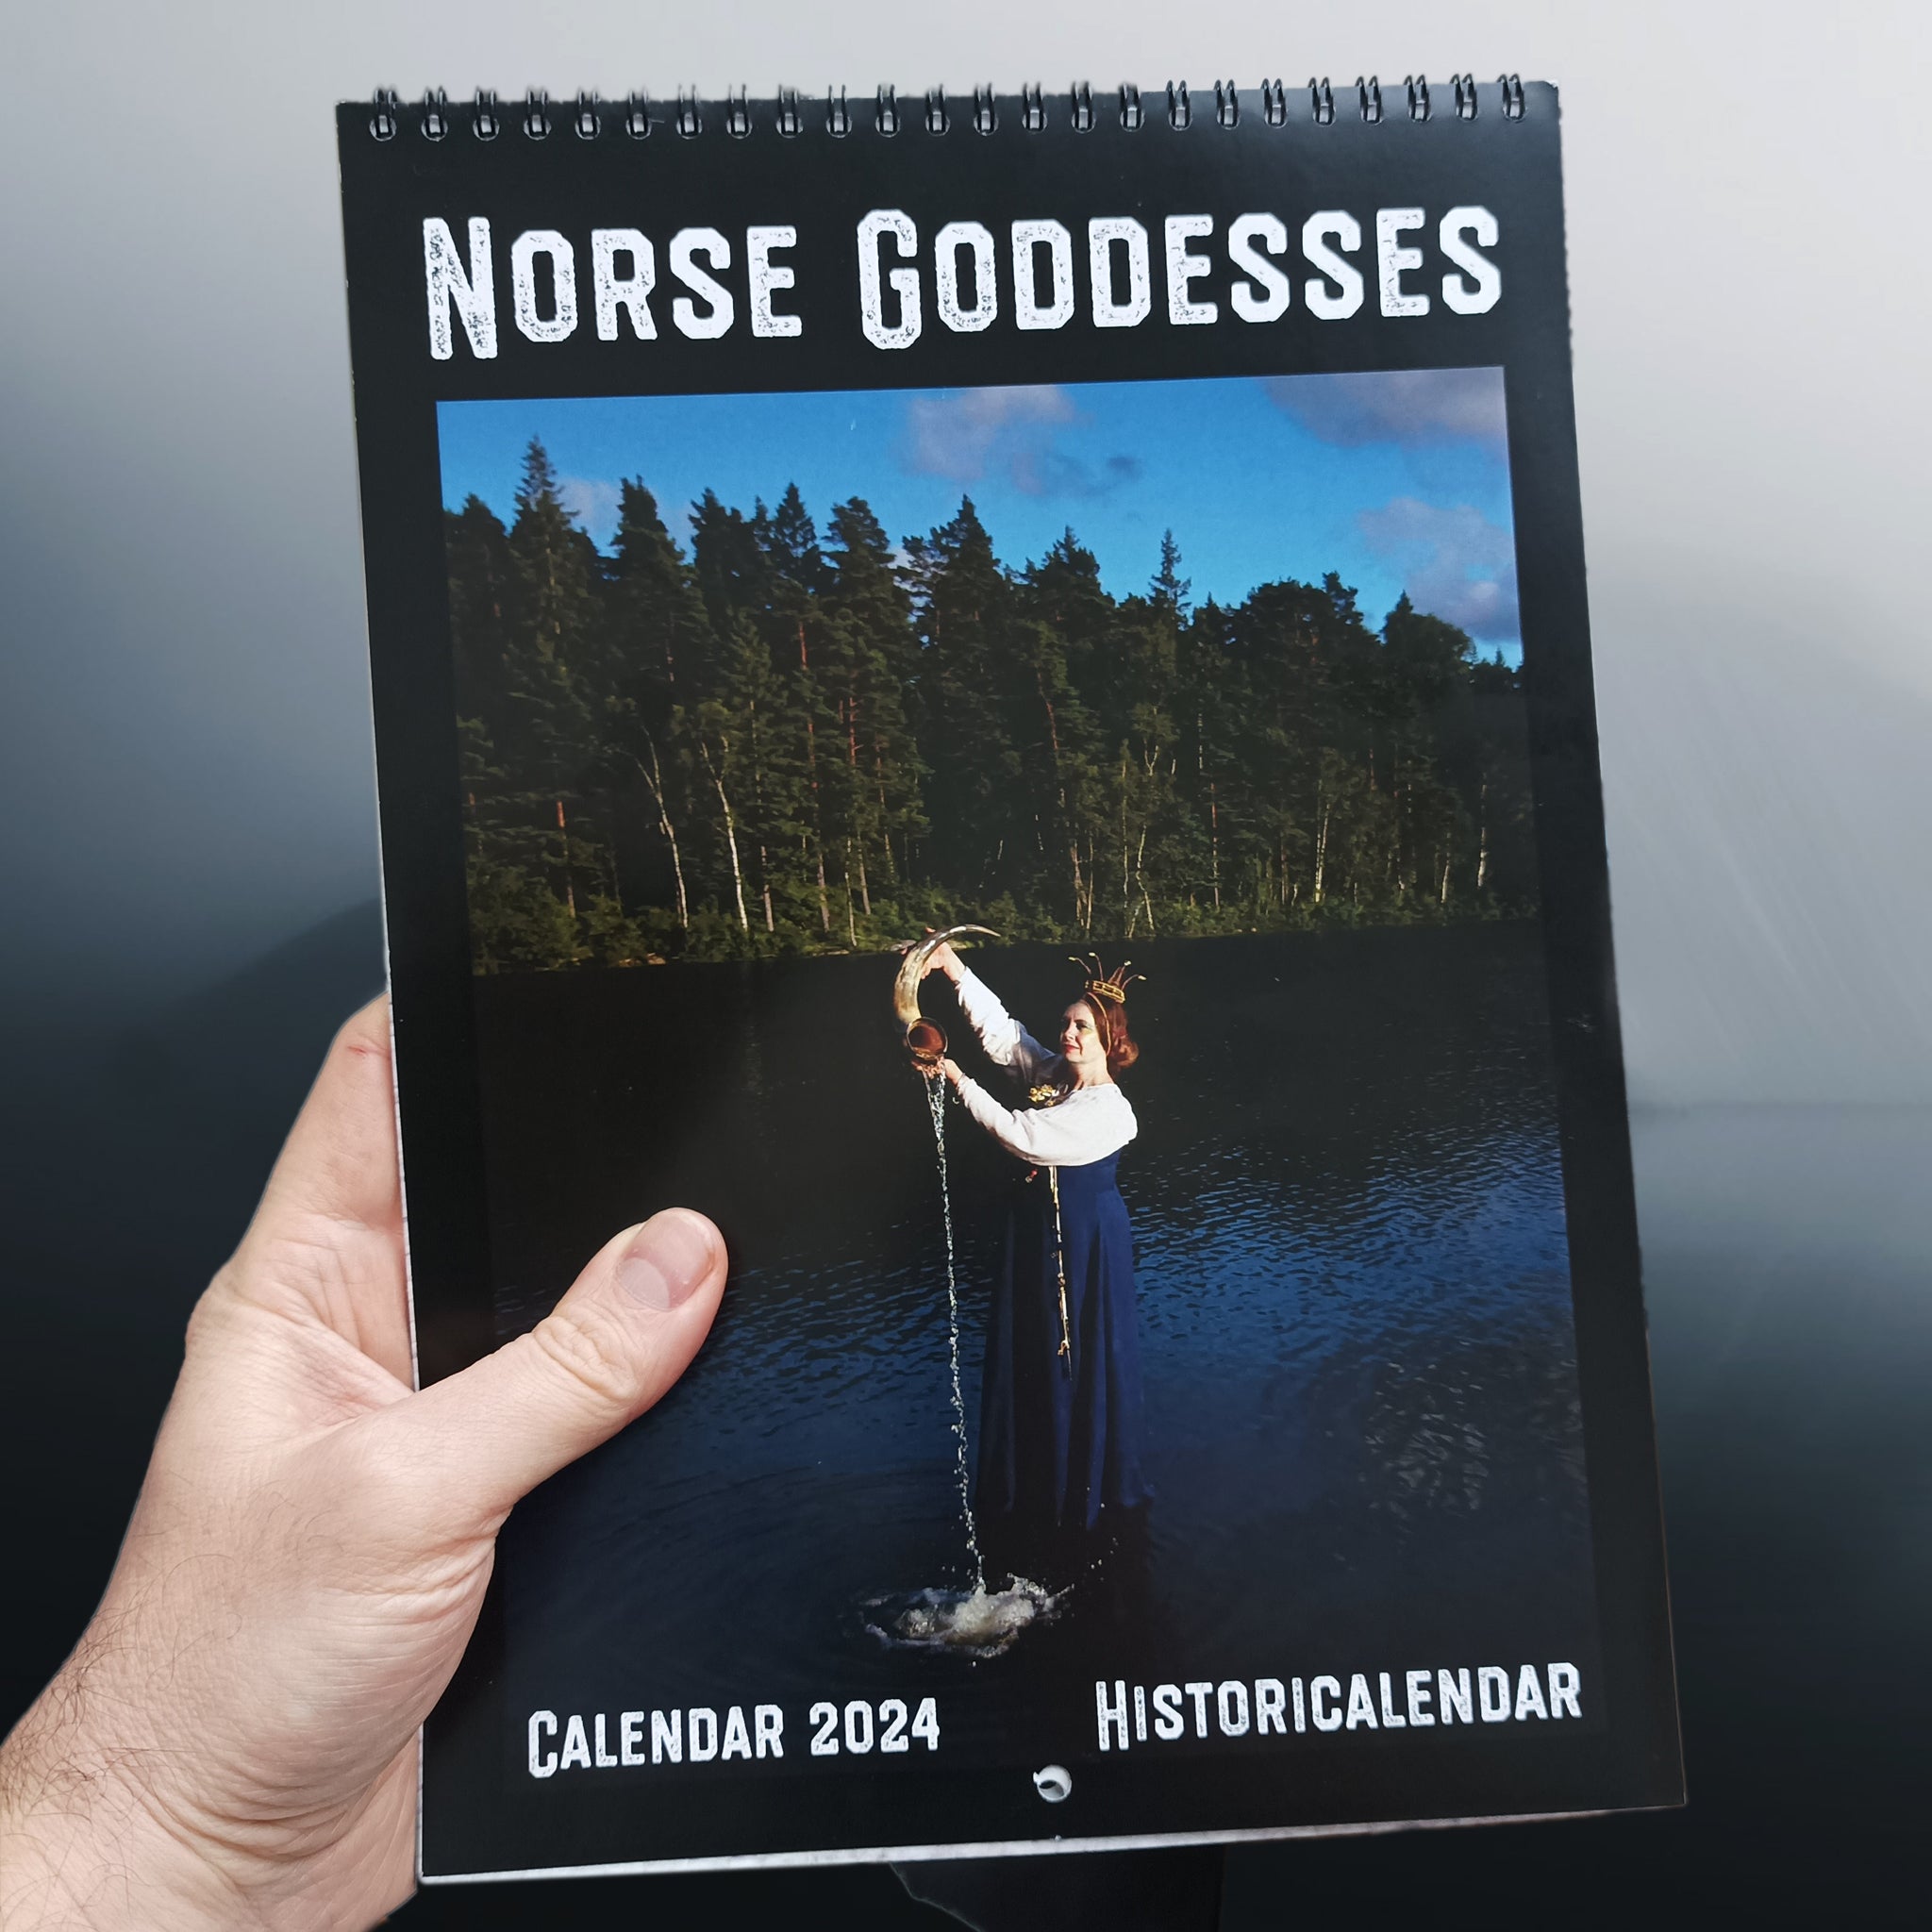 Norse Goddesses Calendar 2024 in Hand